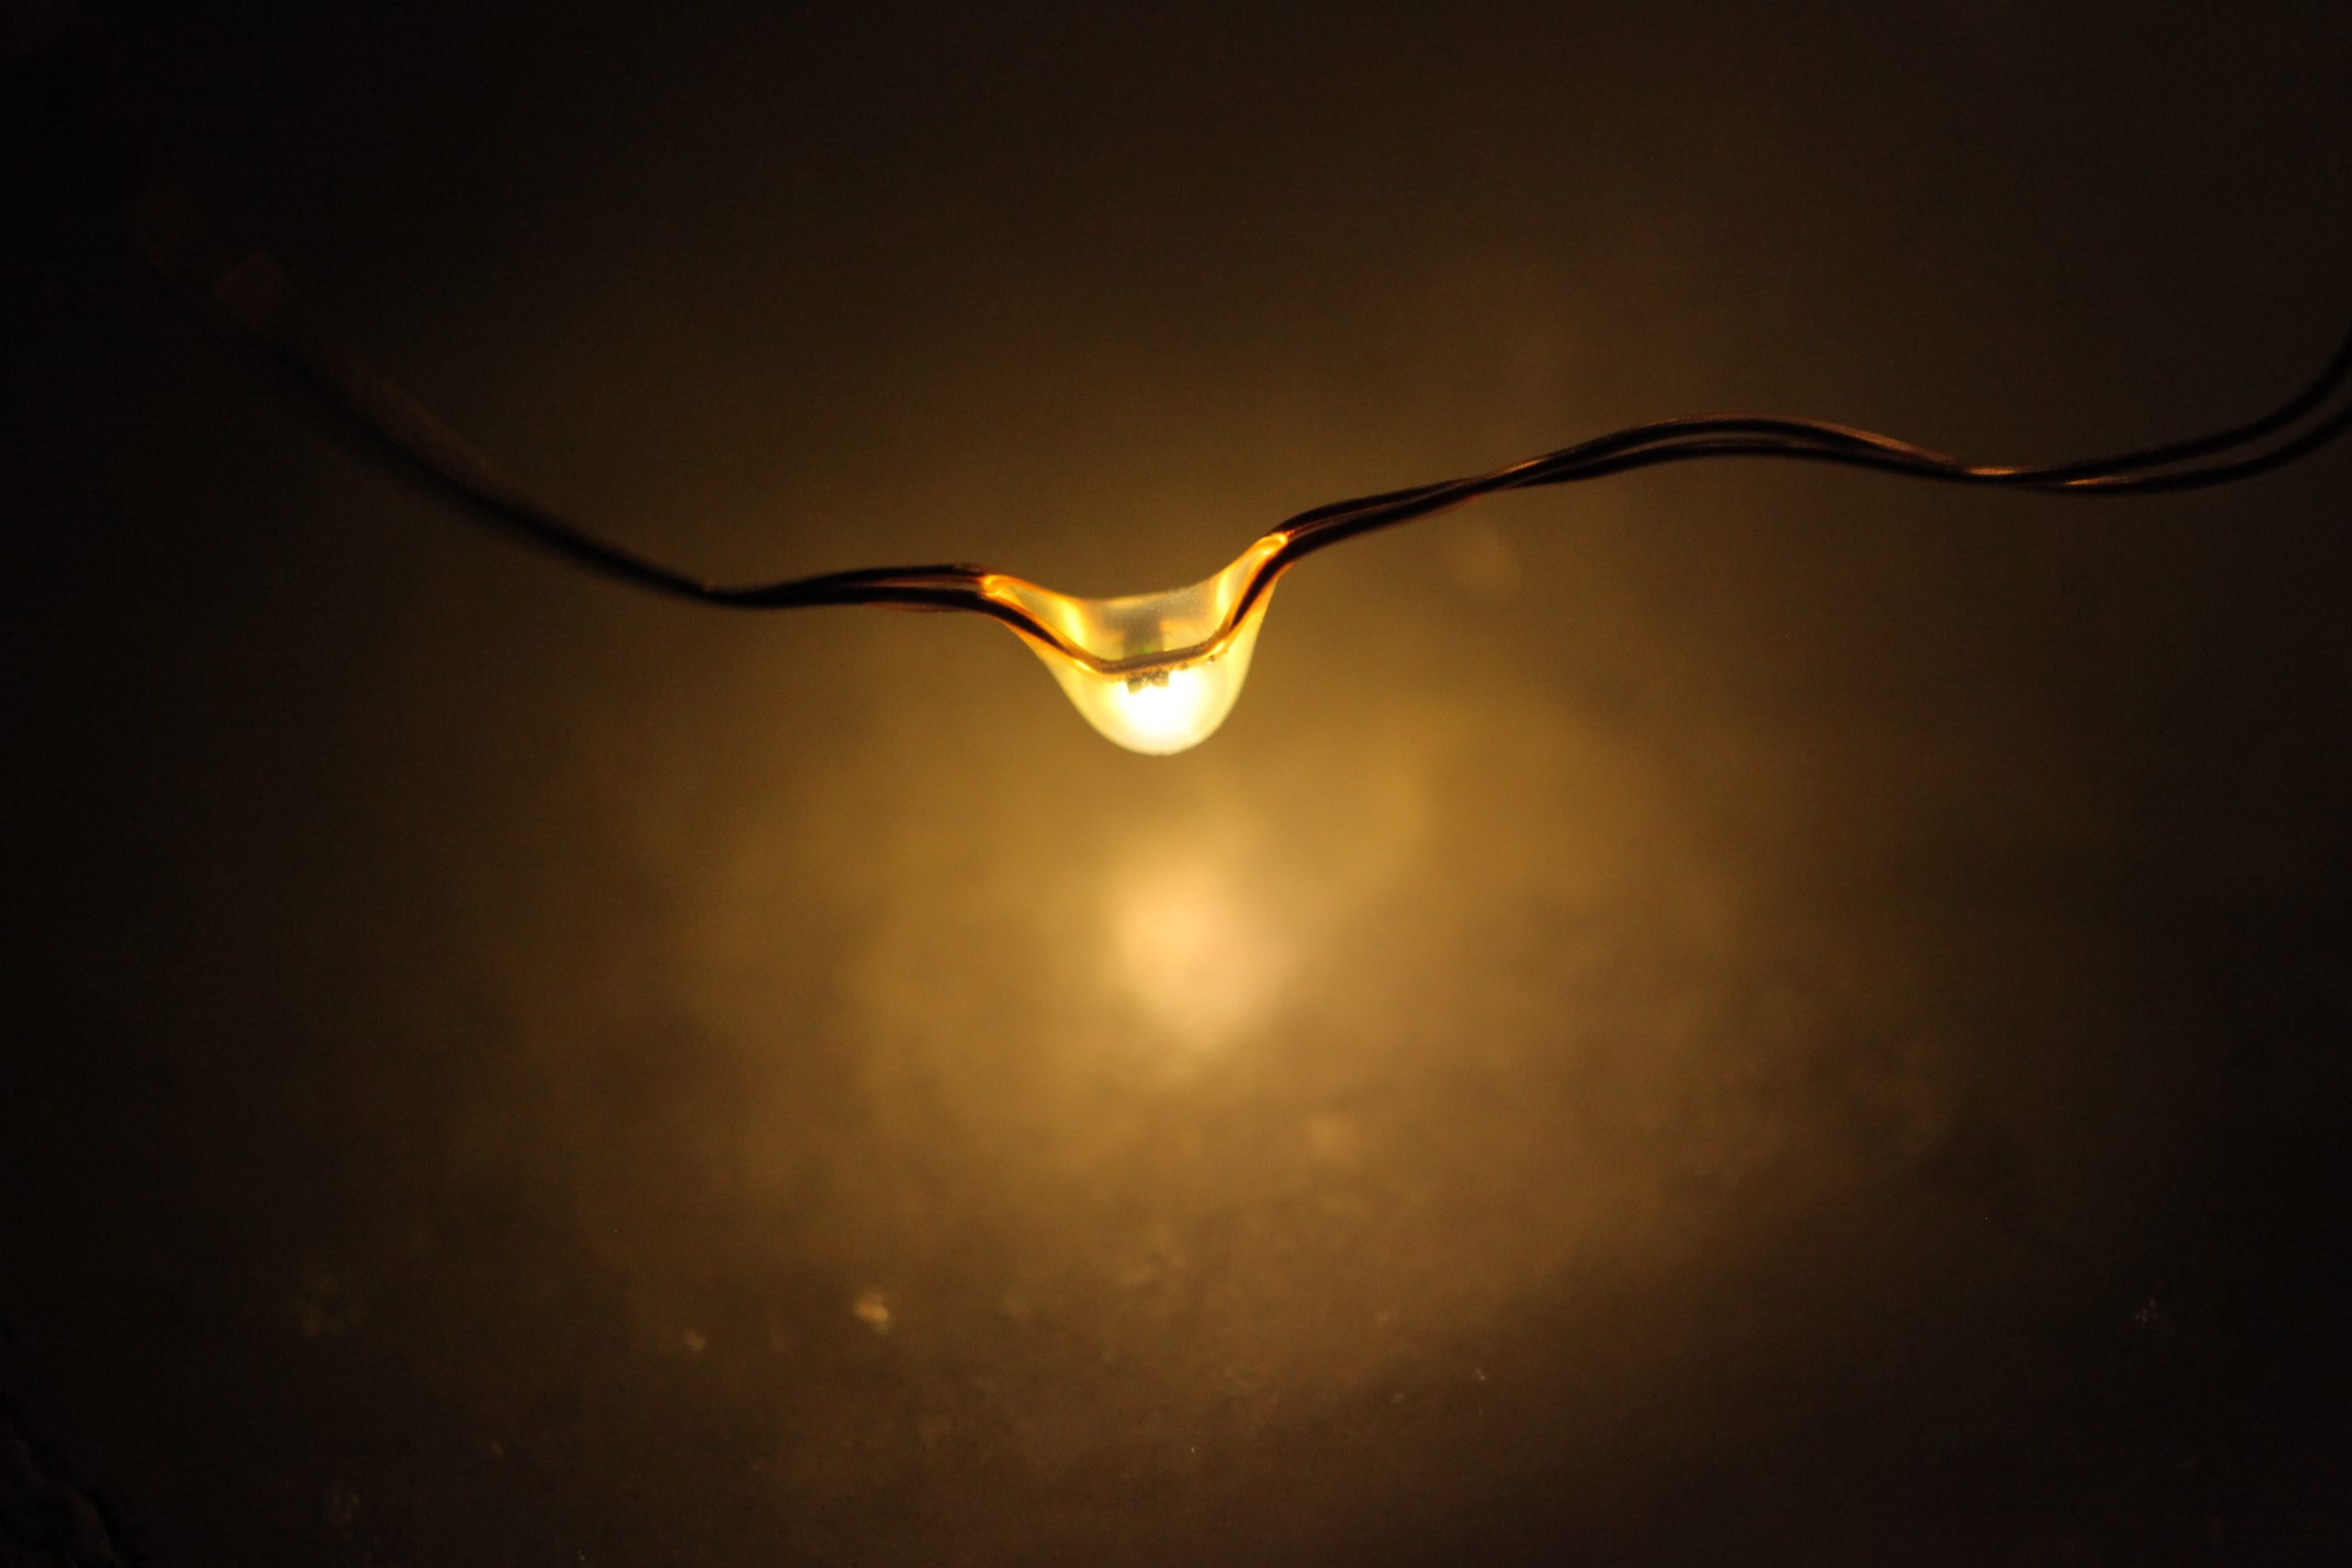 Light passing through a water drop